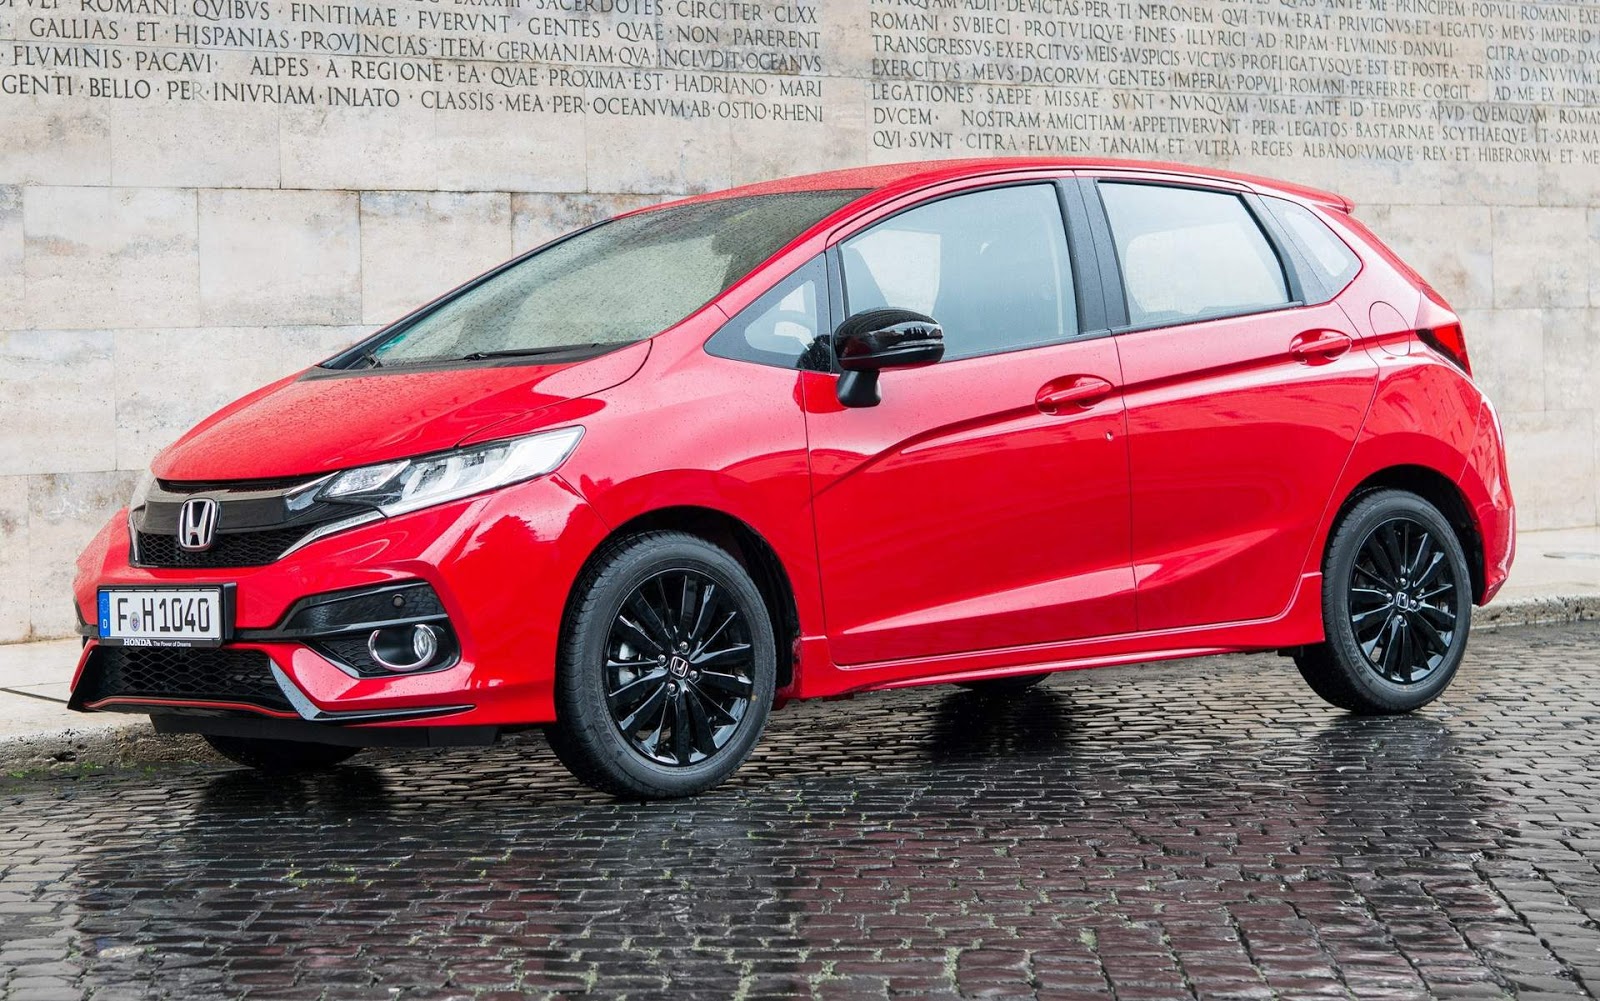 Honda Jazz (Fit) 2018 tem novo motor e facelift Europa